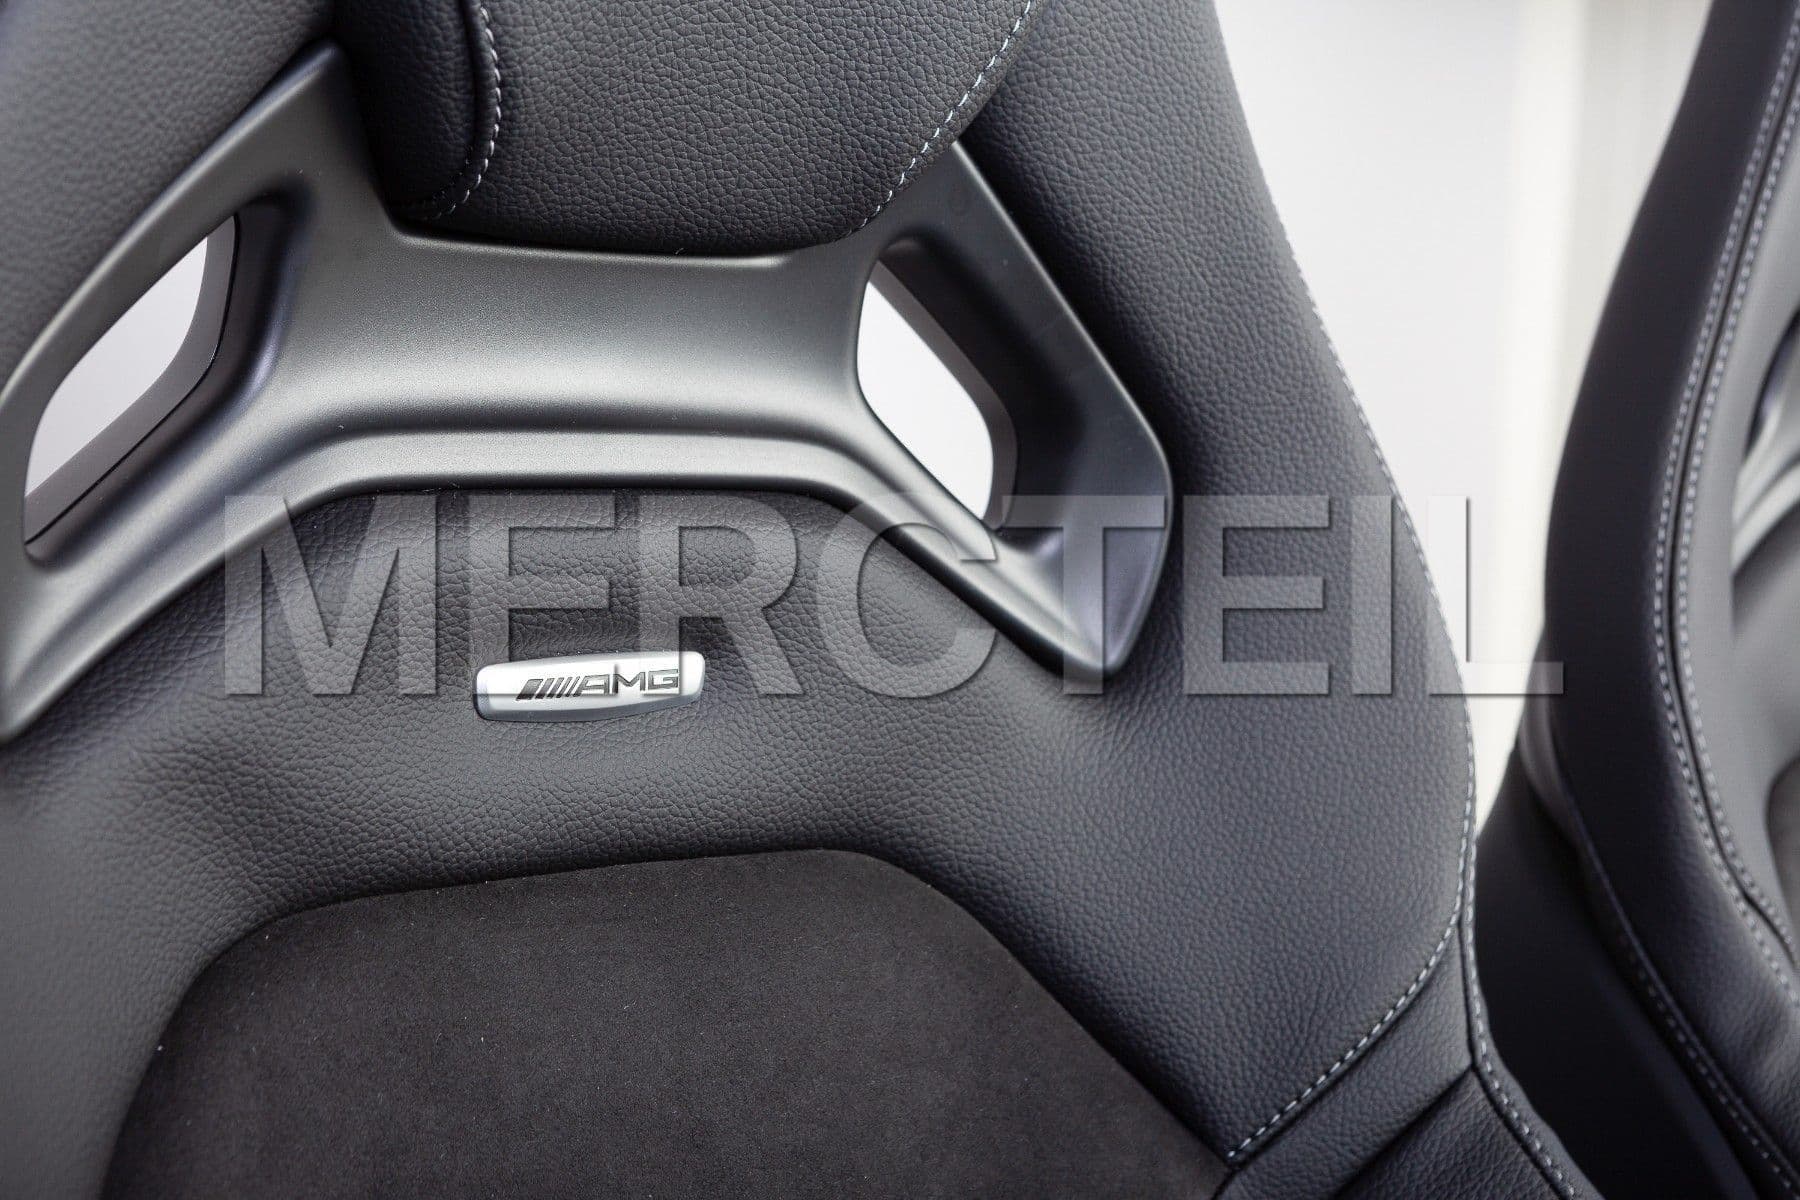 https://mercteil.com/s3/c-class-amg-sport-alcantara-and-leather-seats-lhd-genuine-mercedes-amg-1643113903374-x2.jpg